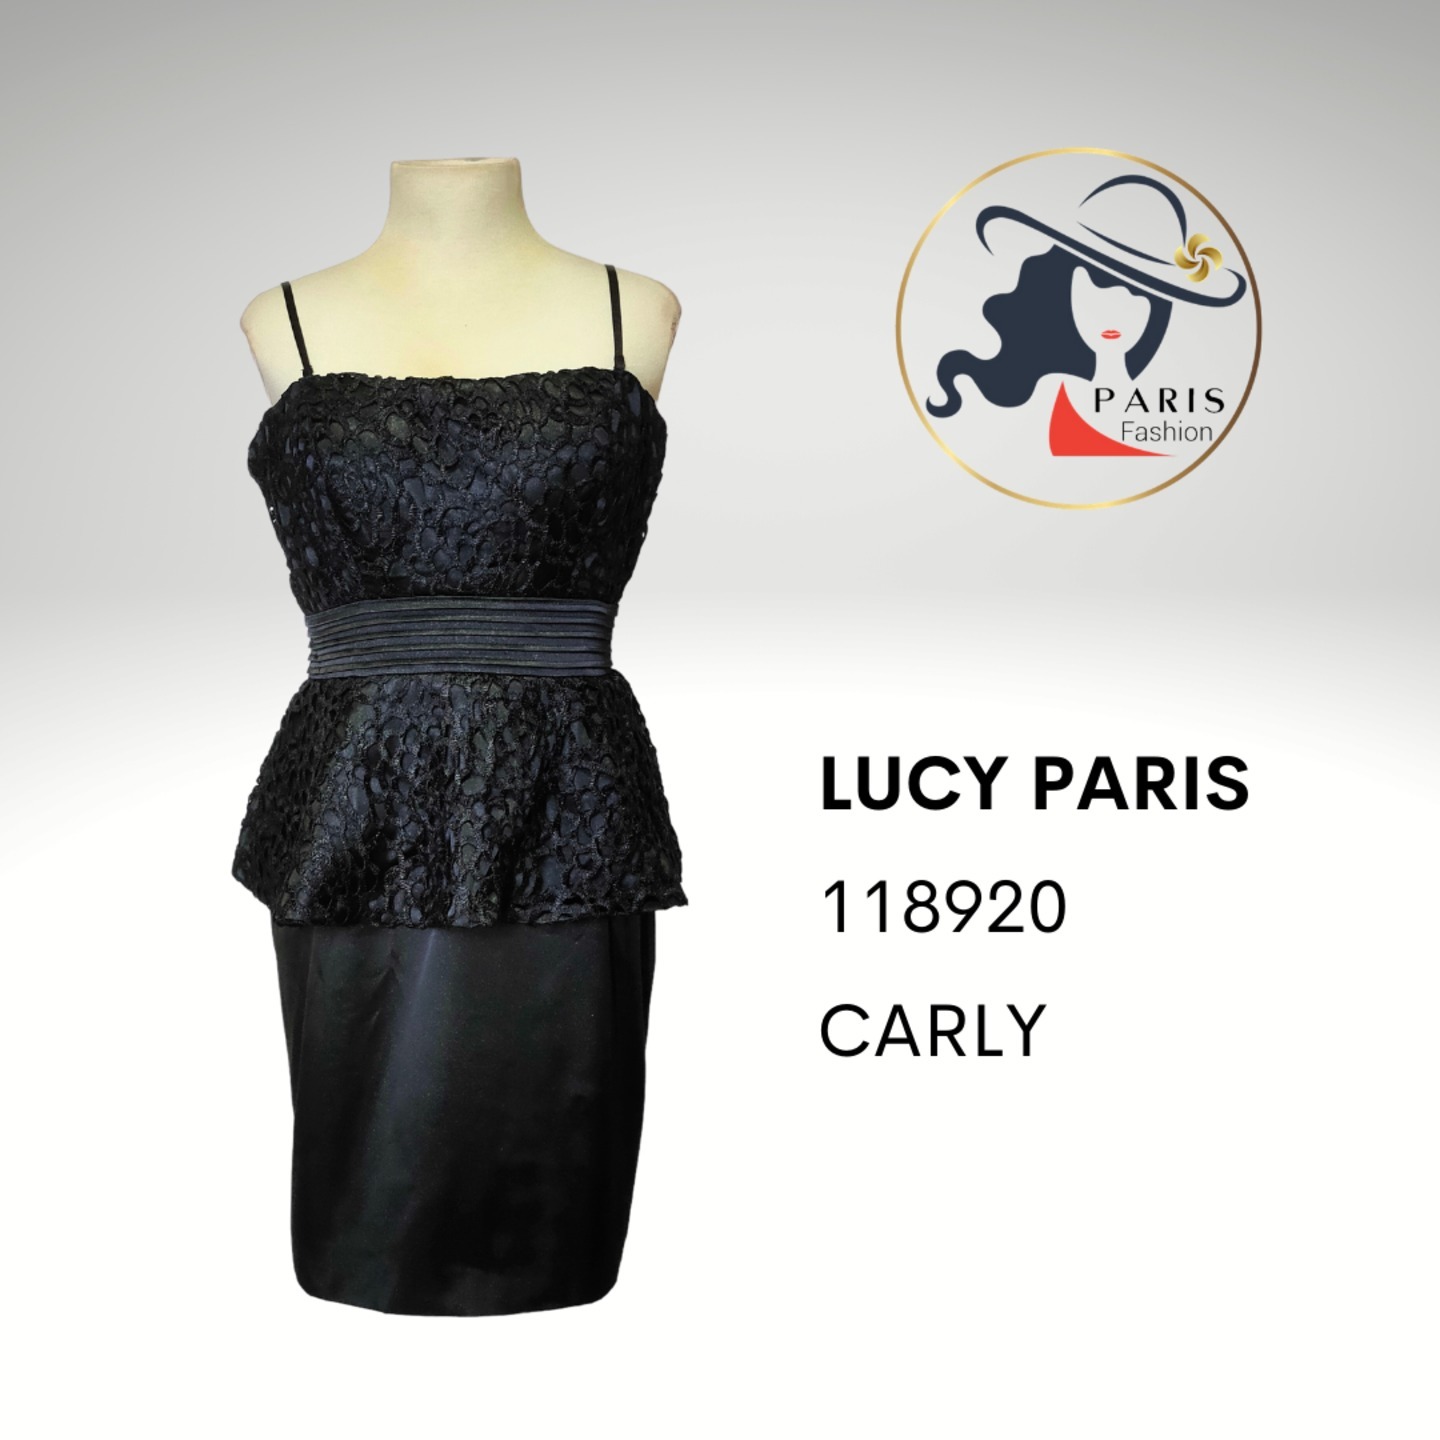 LUCY PARIS 118920 PEPLUM BLACK DRESS